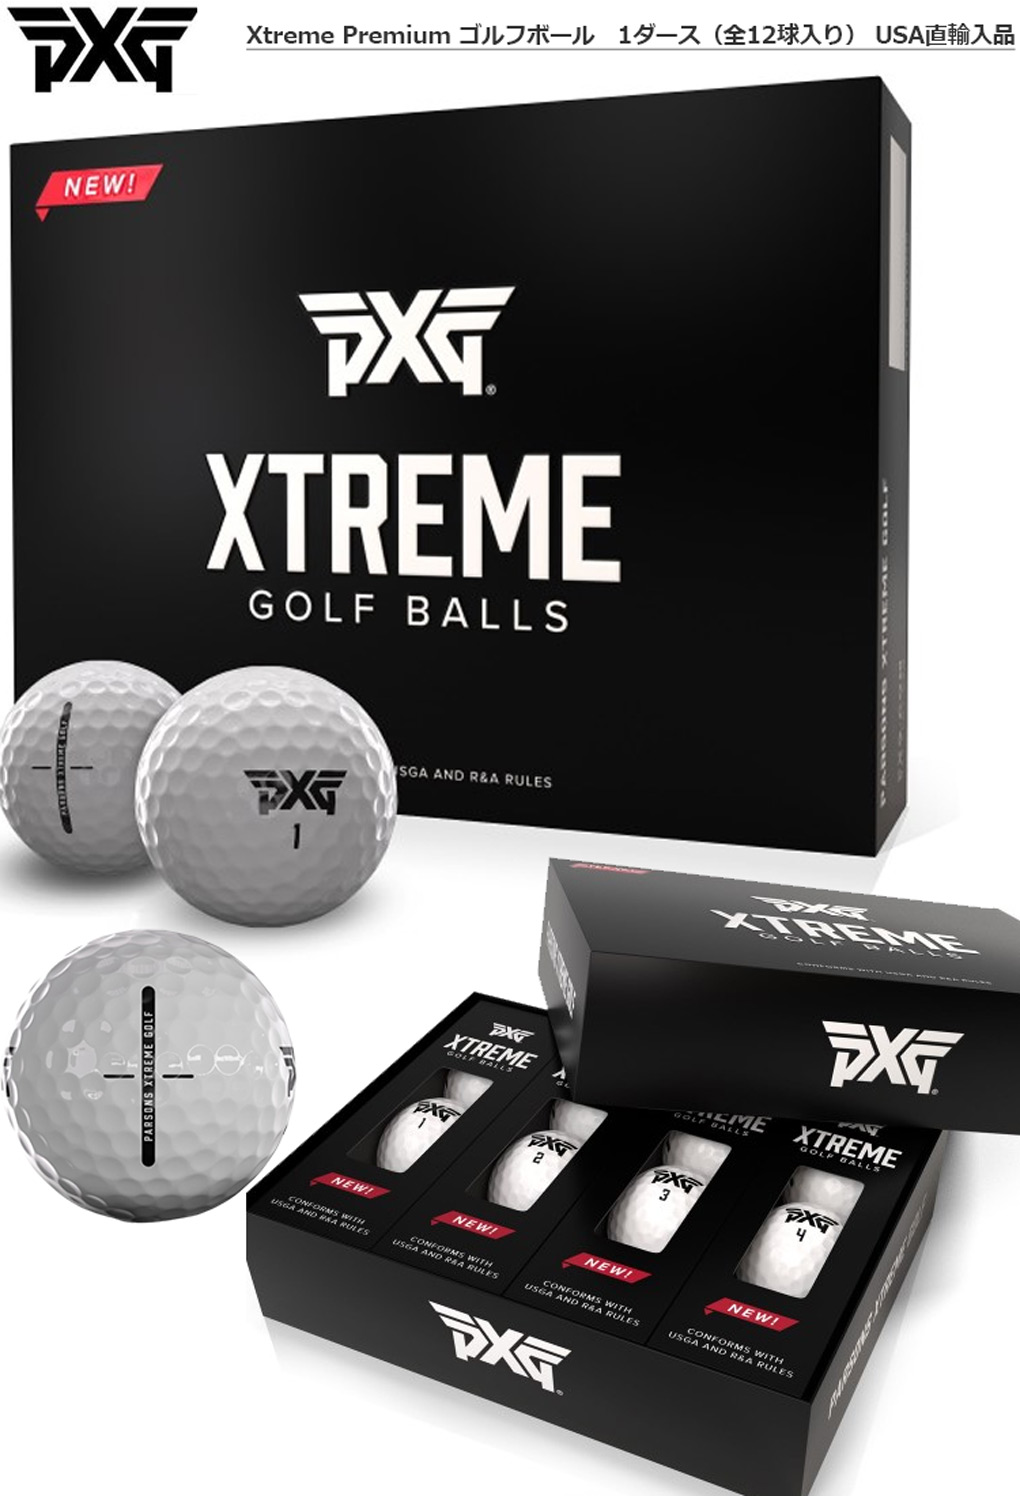 PXG Xtreme Premium ゴルフボール メンズ ウレタンカバー 3ピース構造